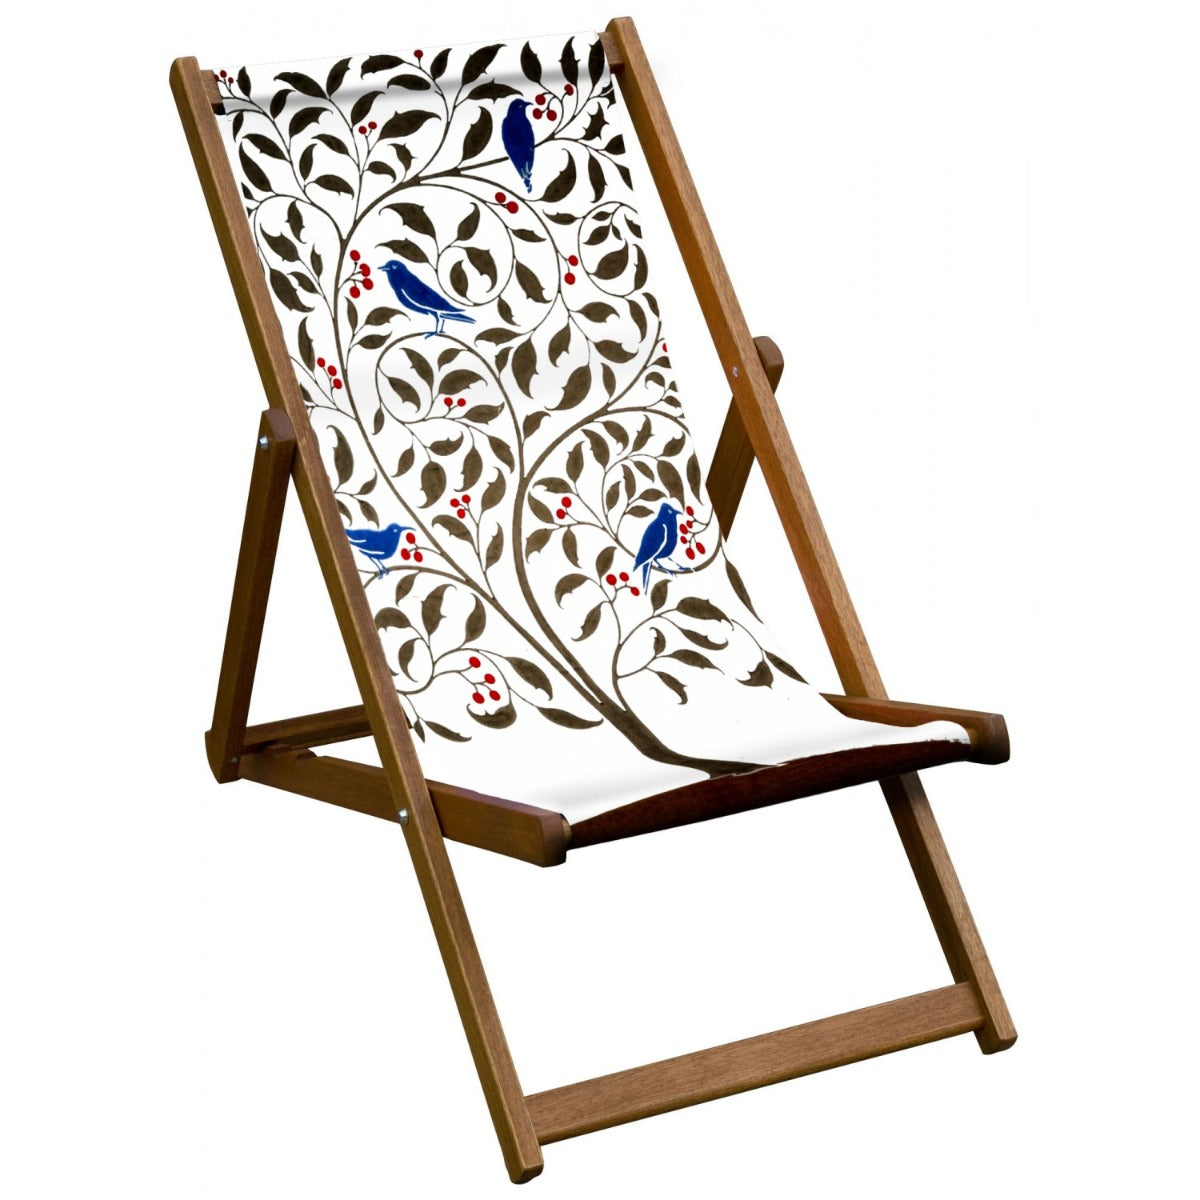 Vintage Inspired Wooden Deckchair with William Morris 'Birds Holly Tree' Design